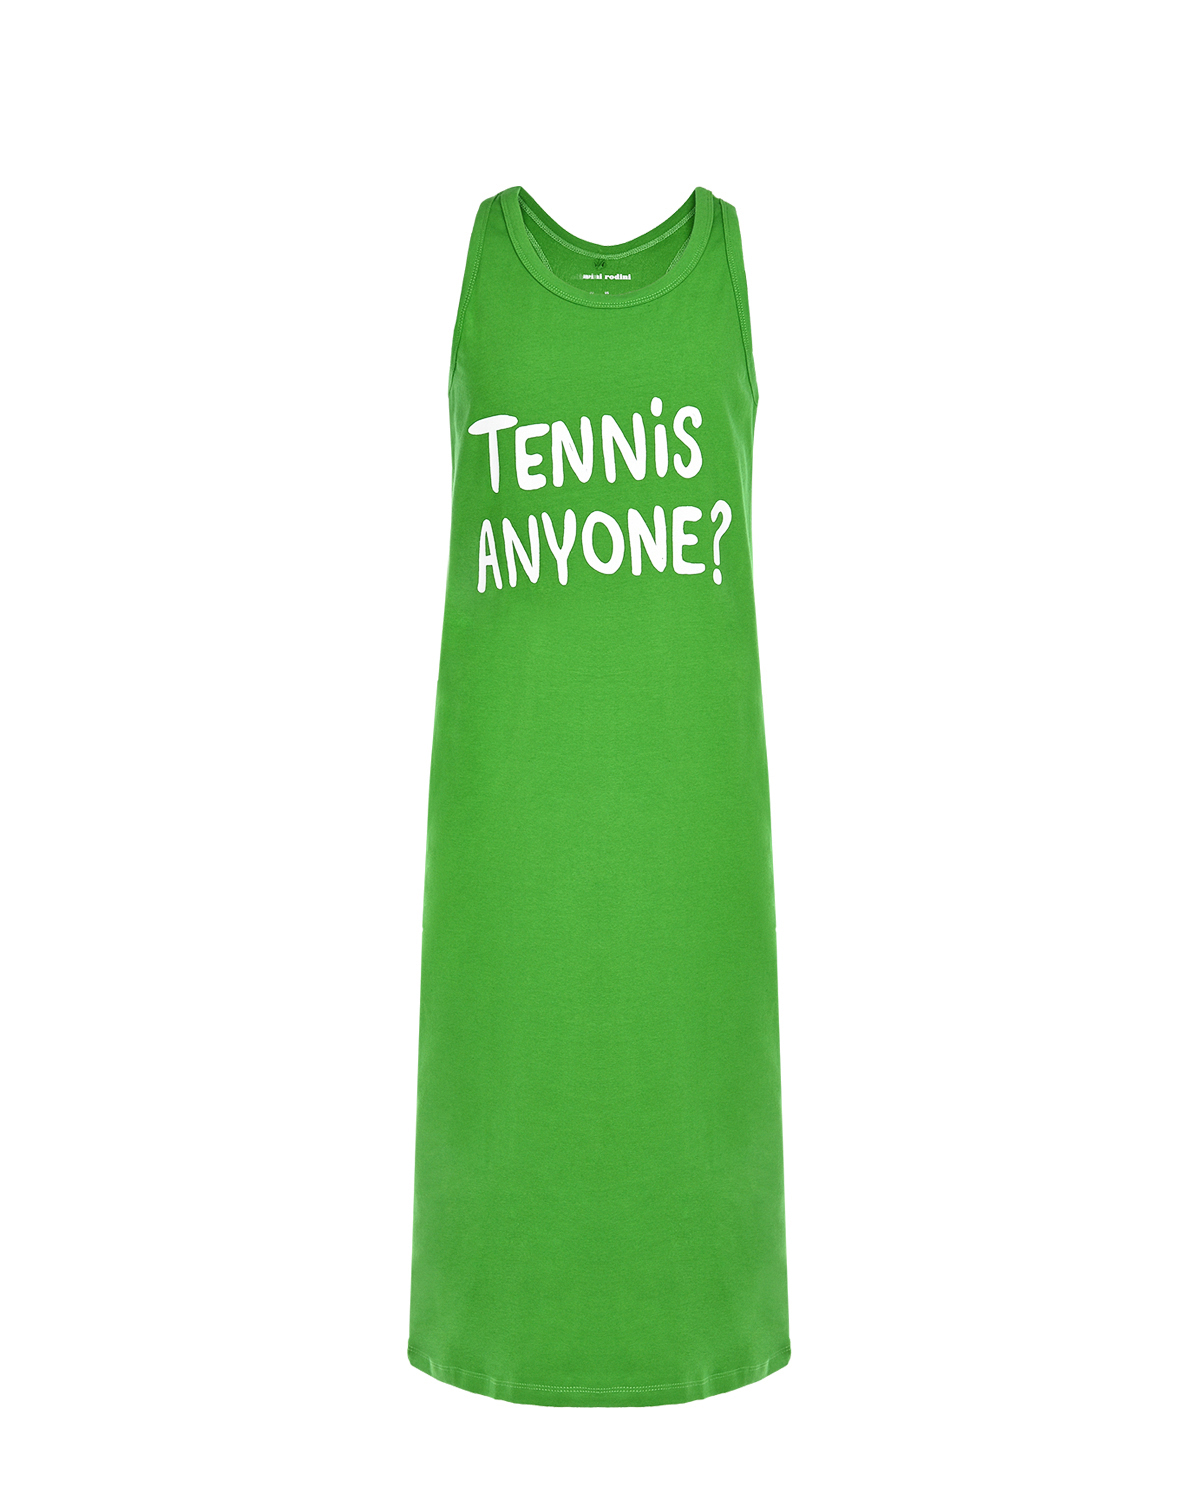 Зеленый сарафан с надписью "Tennis anyone" Mini Rodini детский, размер 116 - фото 1